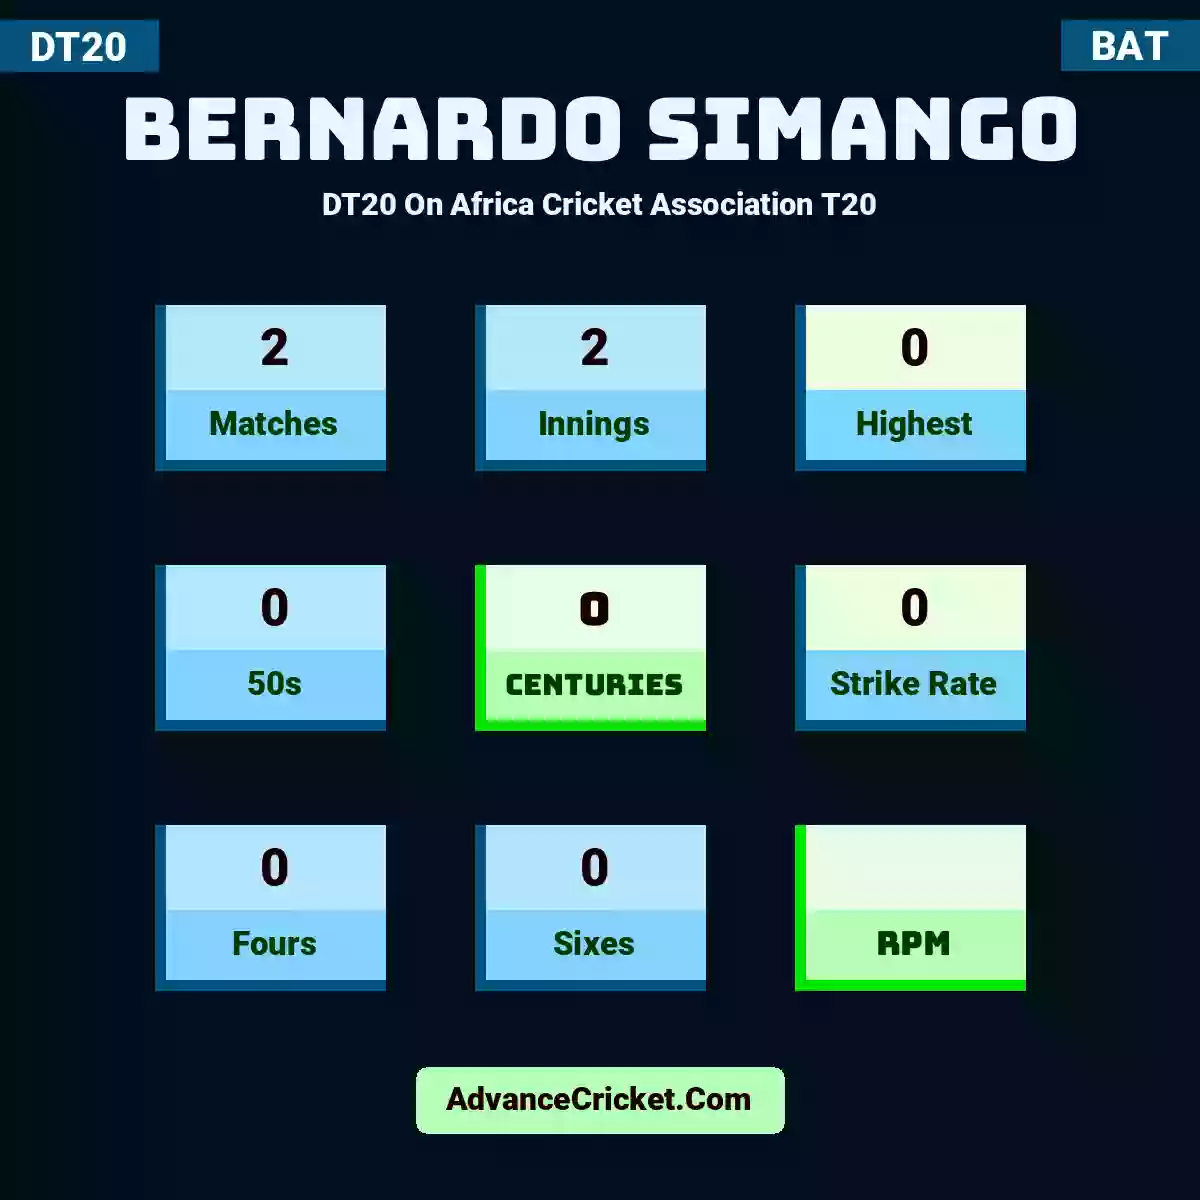 Bernardo Simango DT20  On Africa Cricket Association T20, Bernardo Simango played 2 matches, scored 0 runs as highest, 0 half-centuries, and 0 centuries, with a strike rate of 0. B.Simango hit 0 fours and 0 sixes.